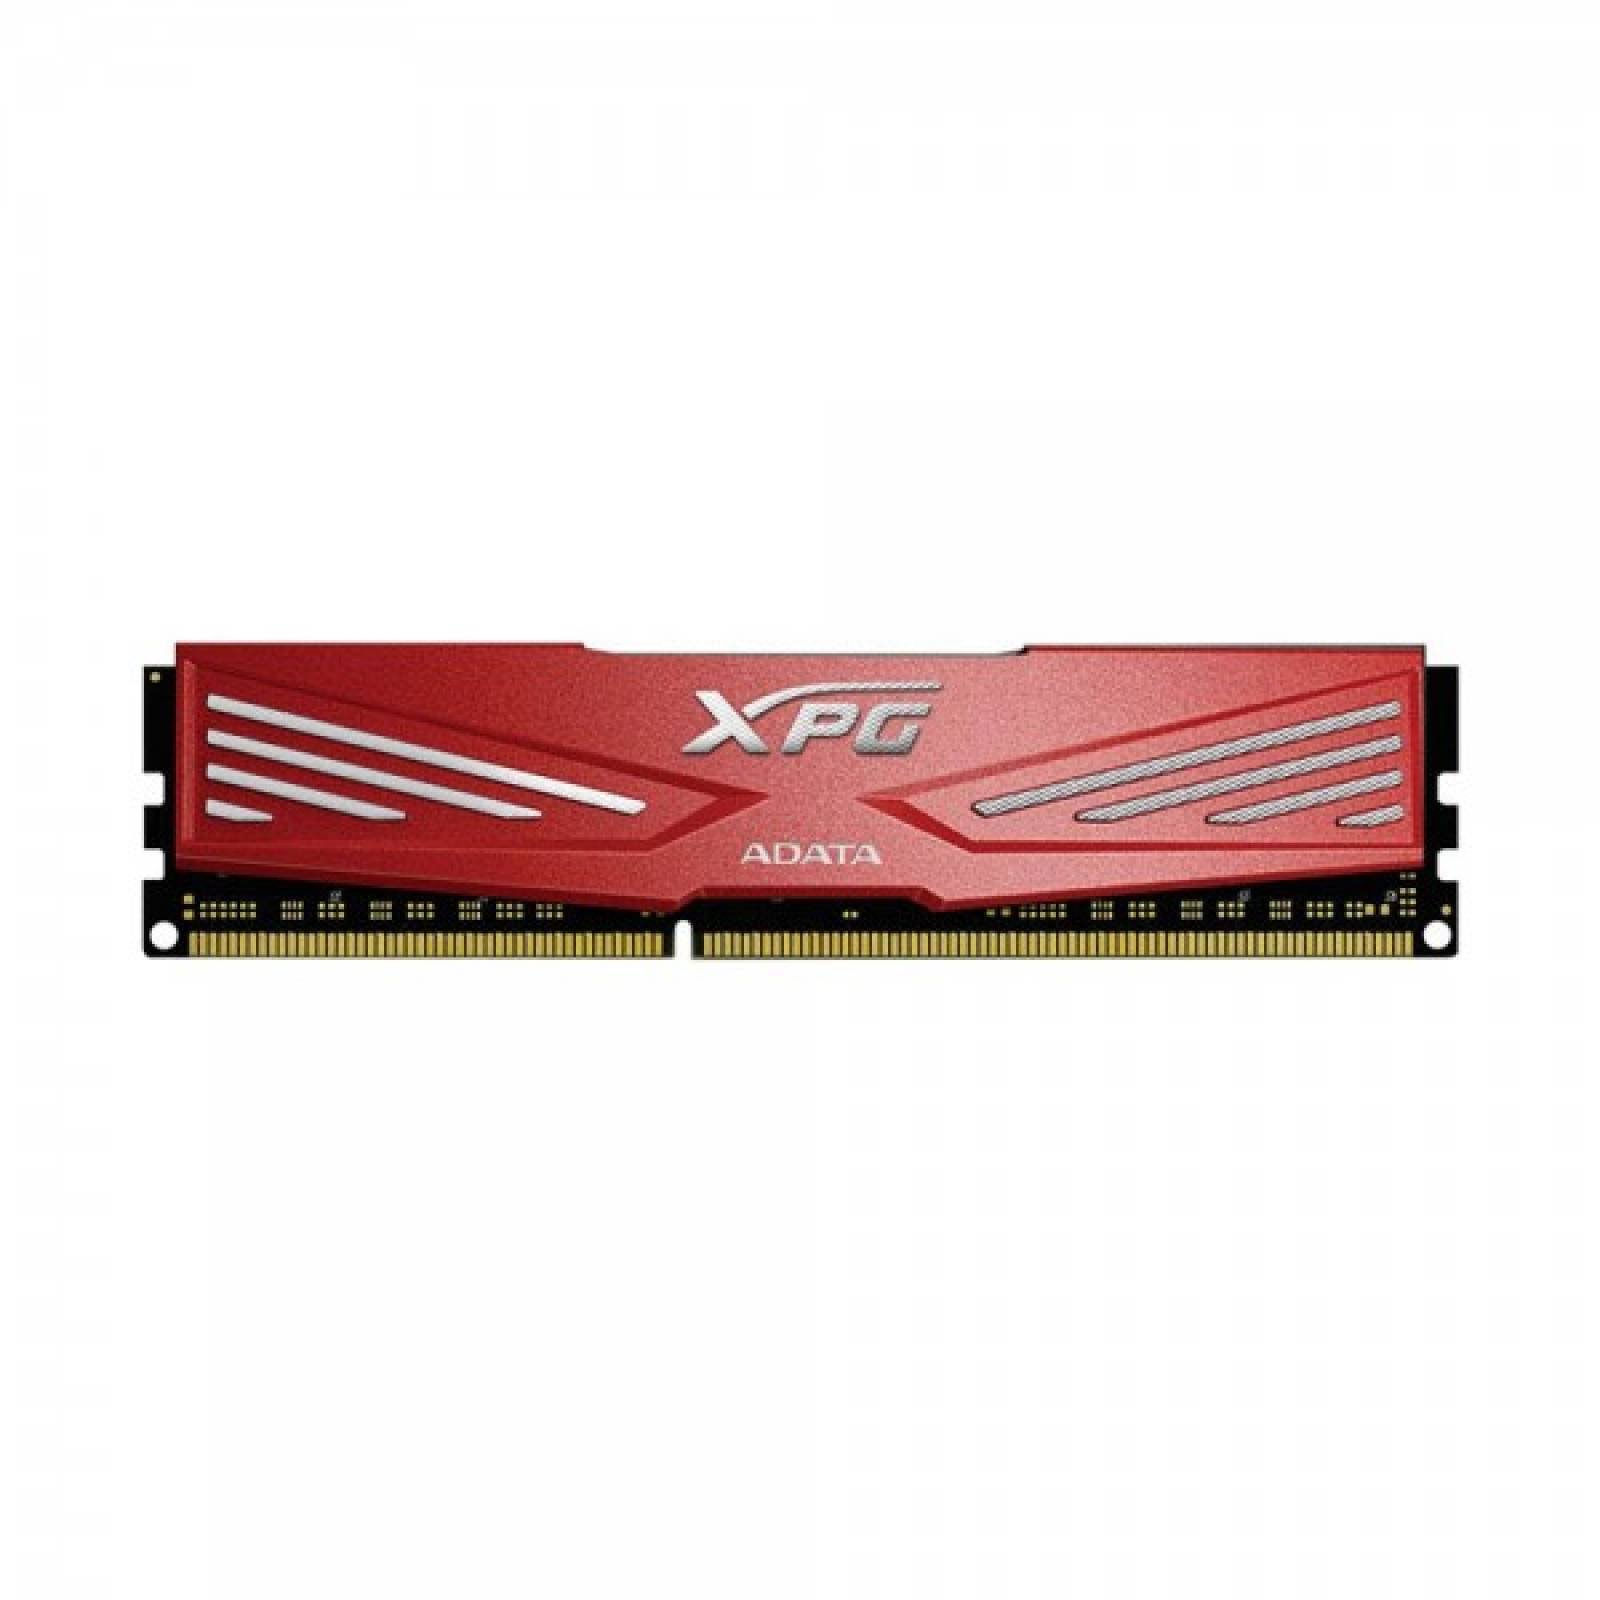 Memoria RAM Adata DDR3 XPG SKY Rojo 1600MHz 4GB CL11